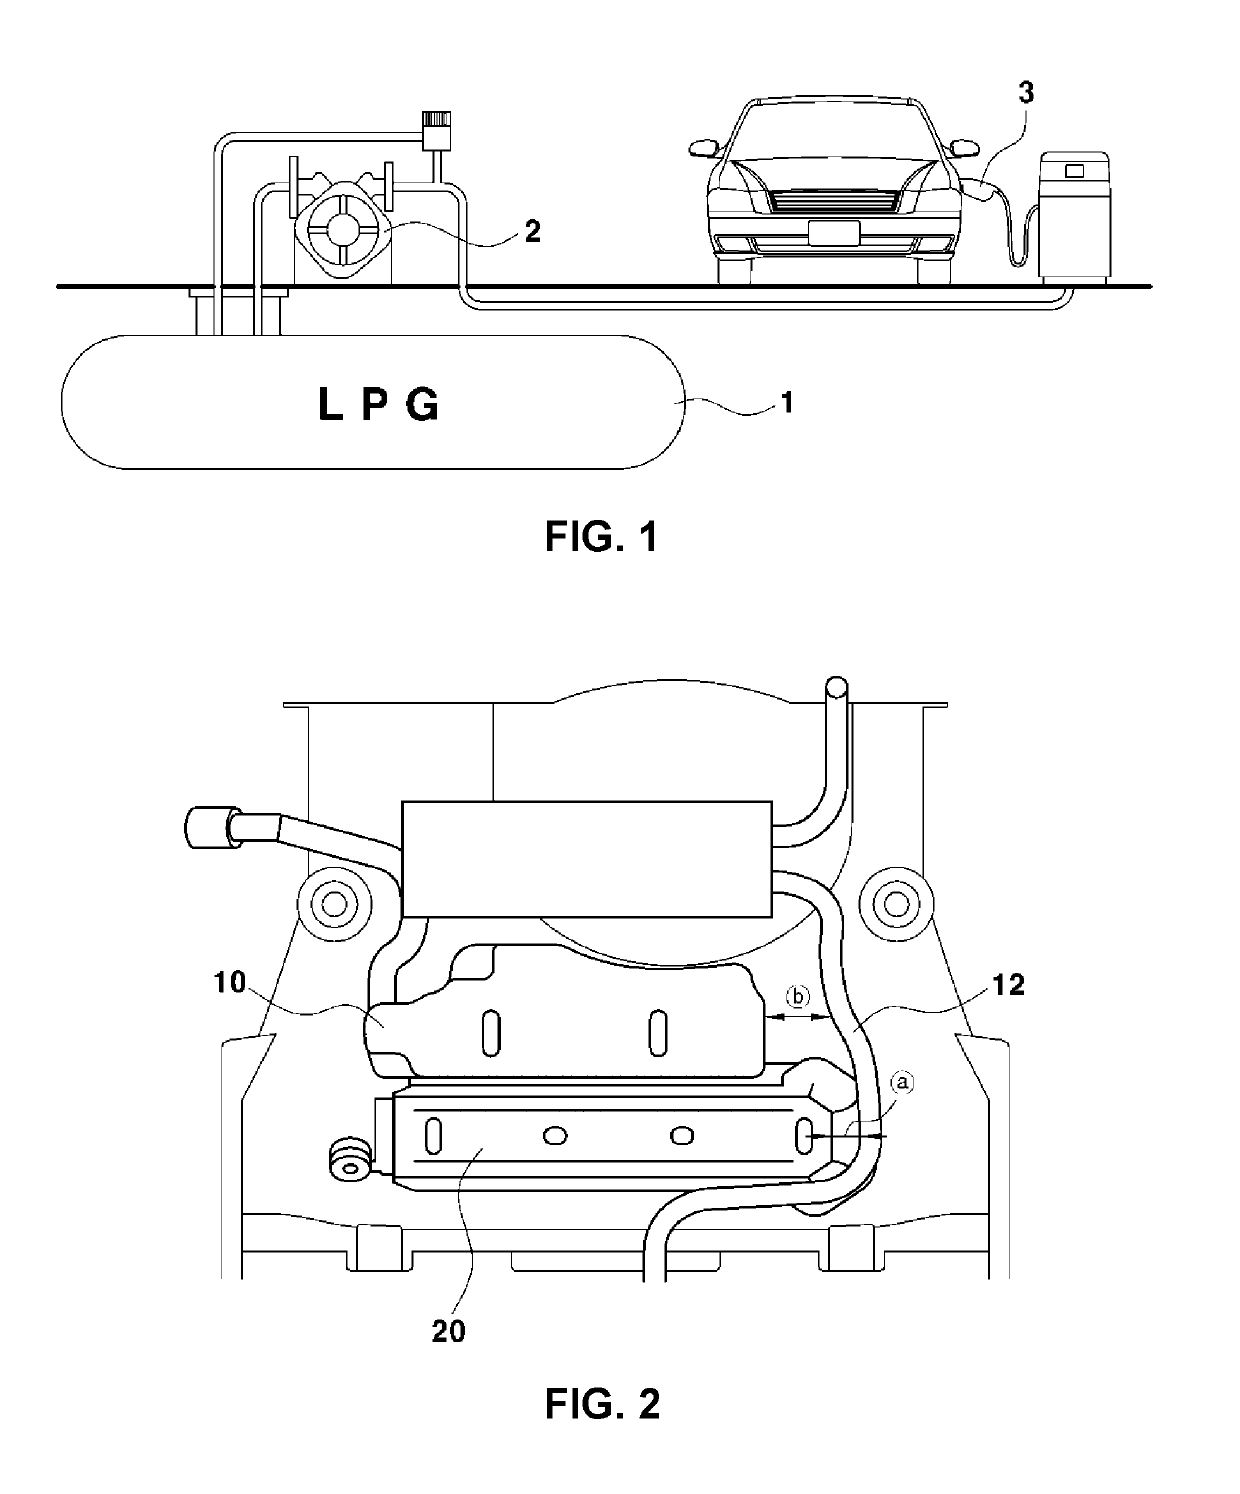 LPG filling system of bi-fuel vehicle